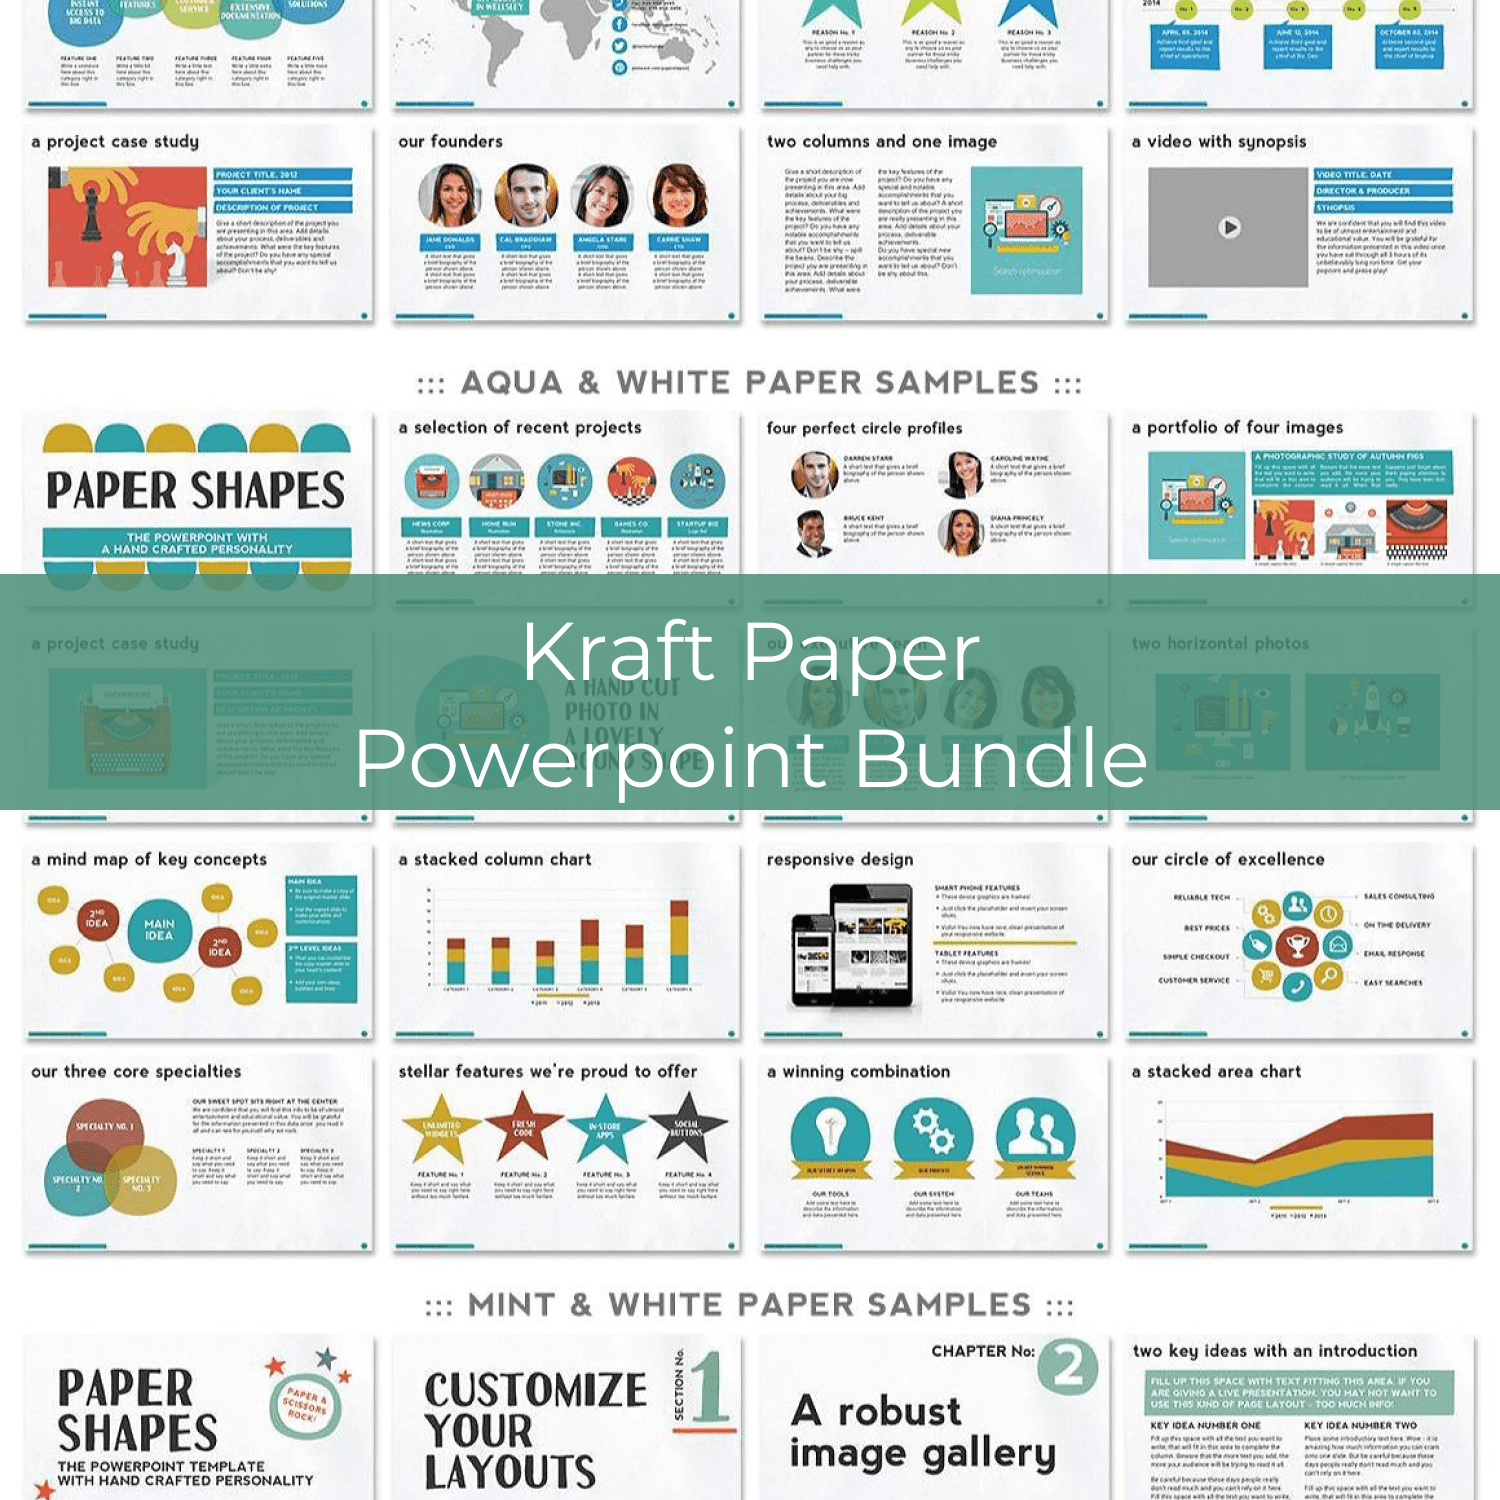 kraft paper powerpoint bundle preview image.